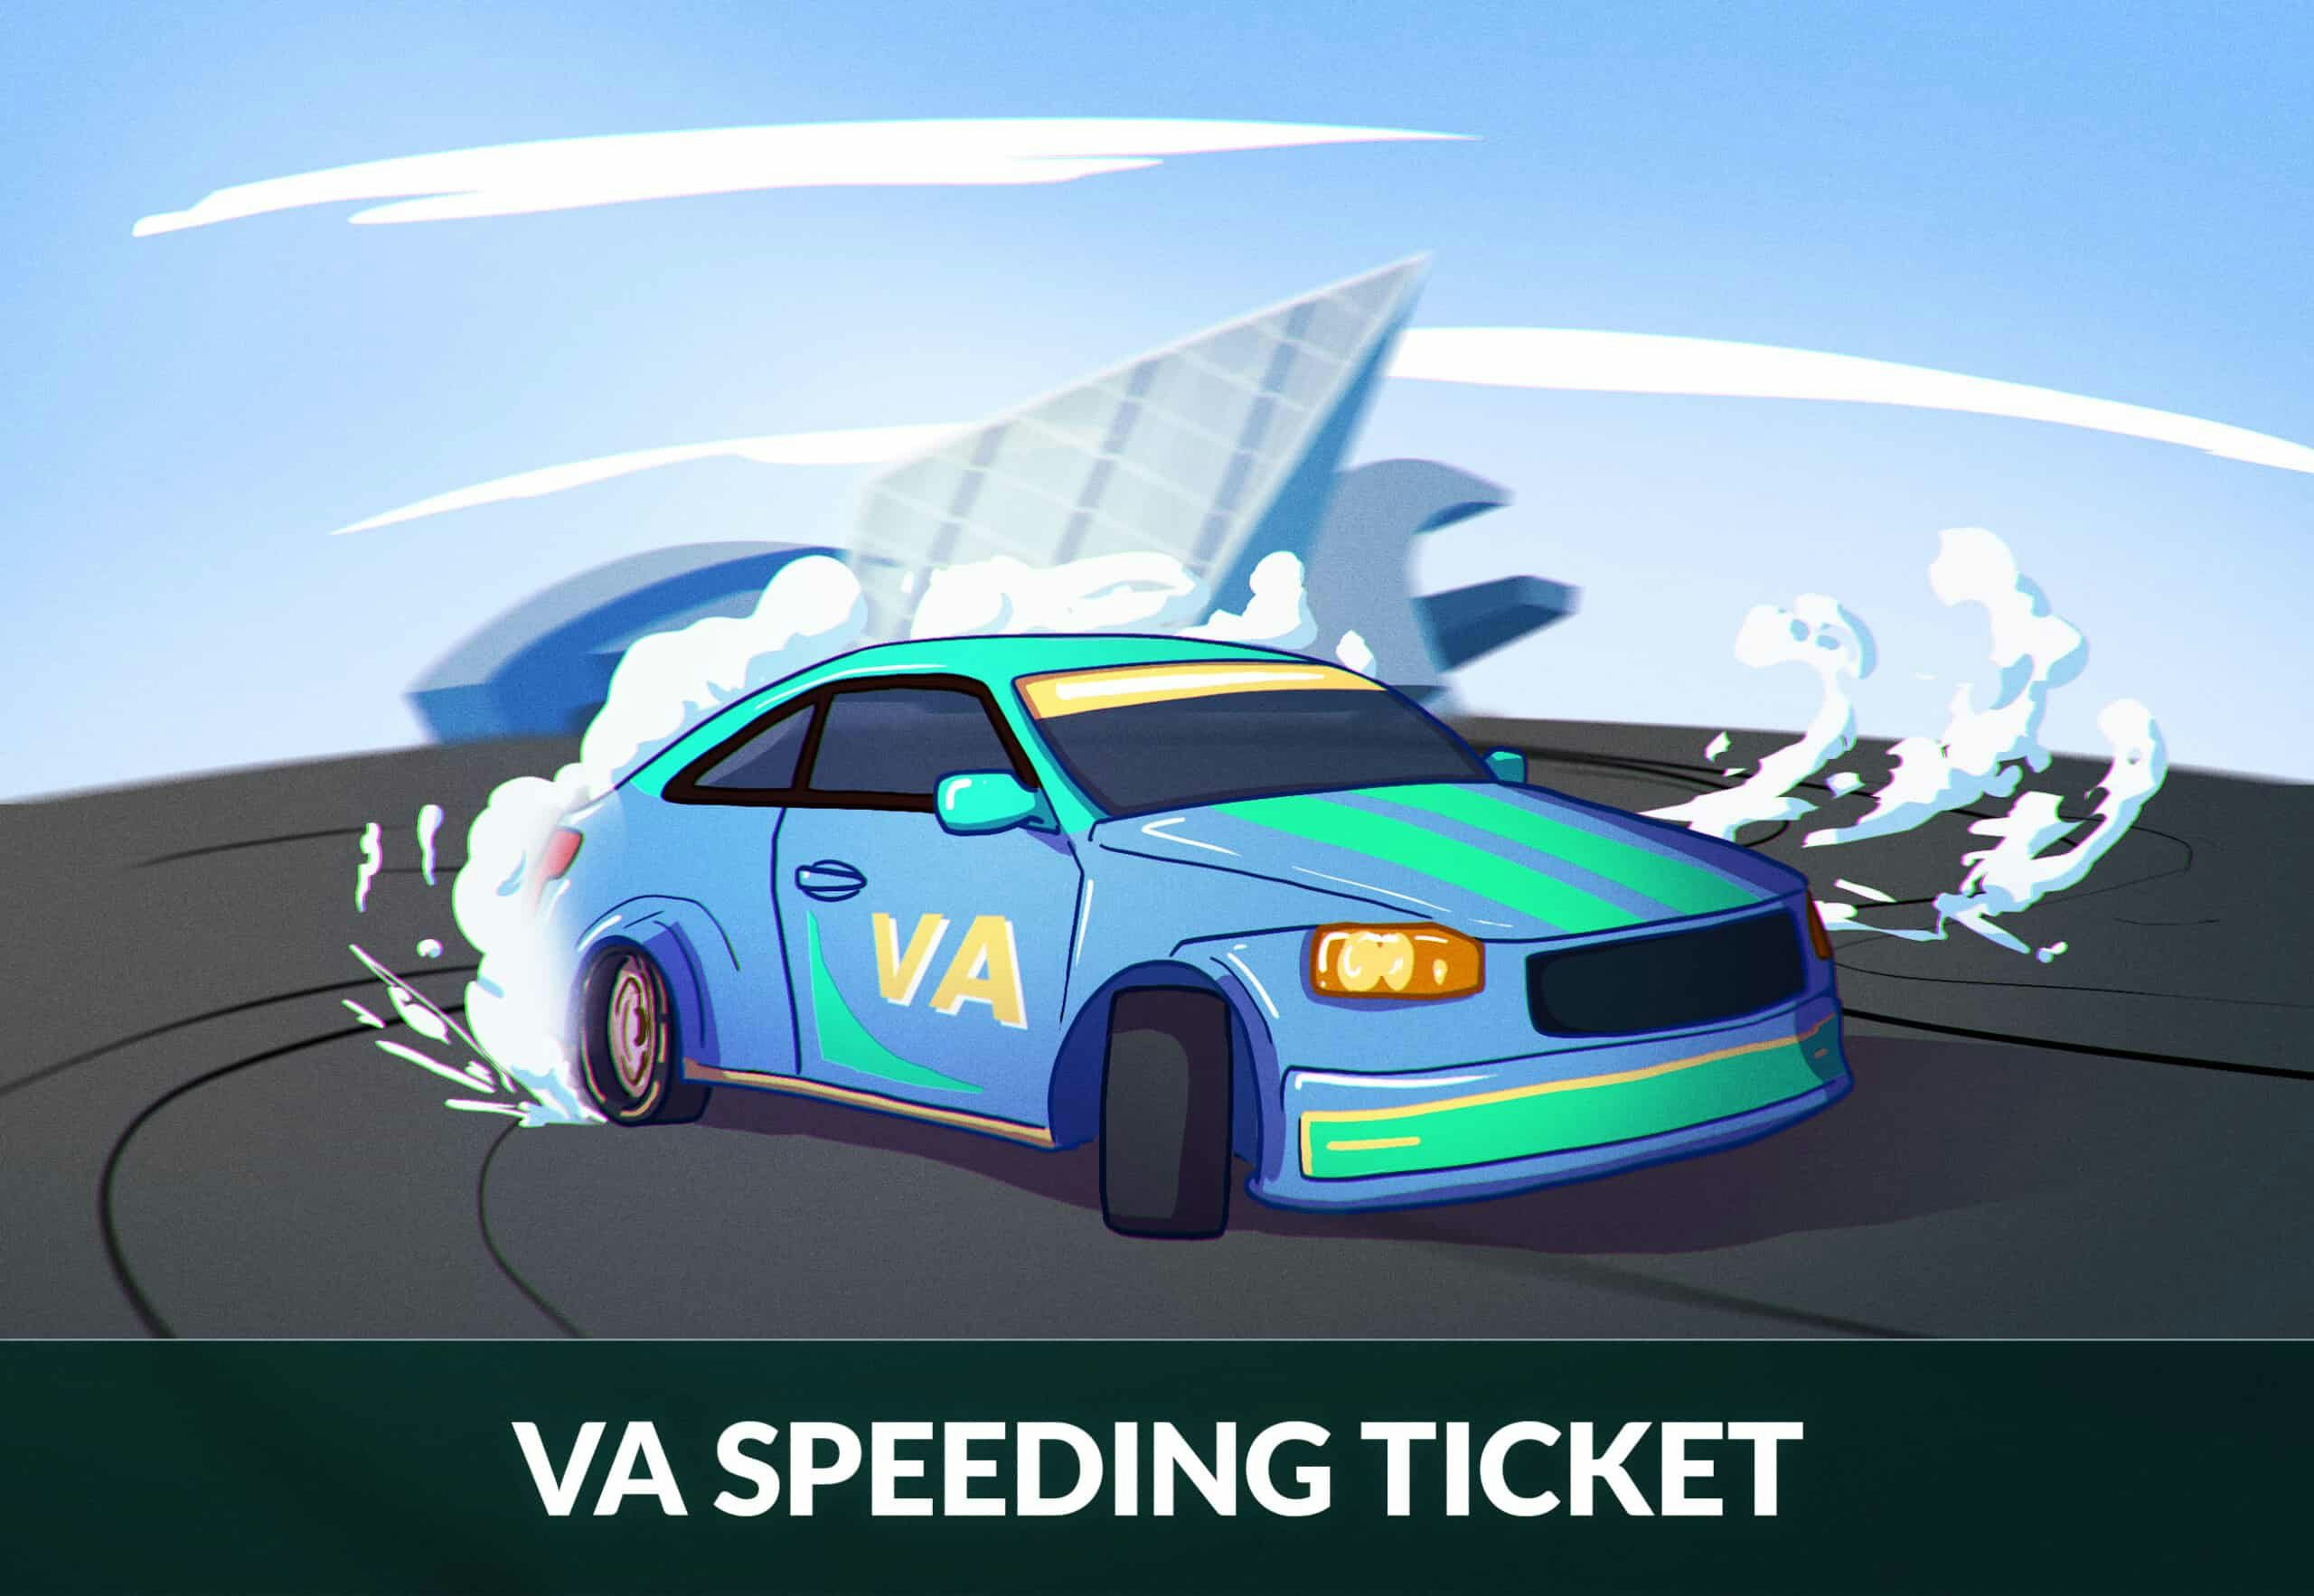 Virginia speeding ticket